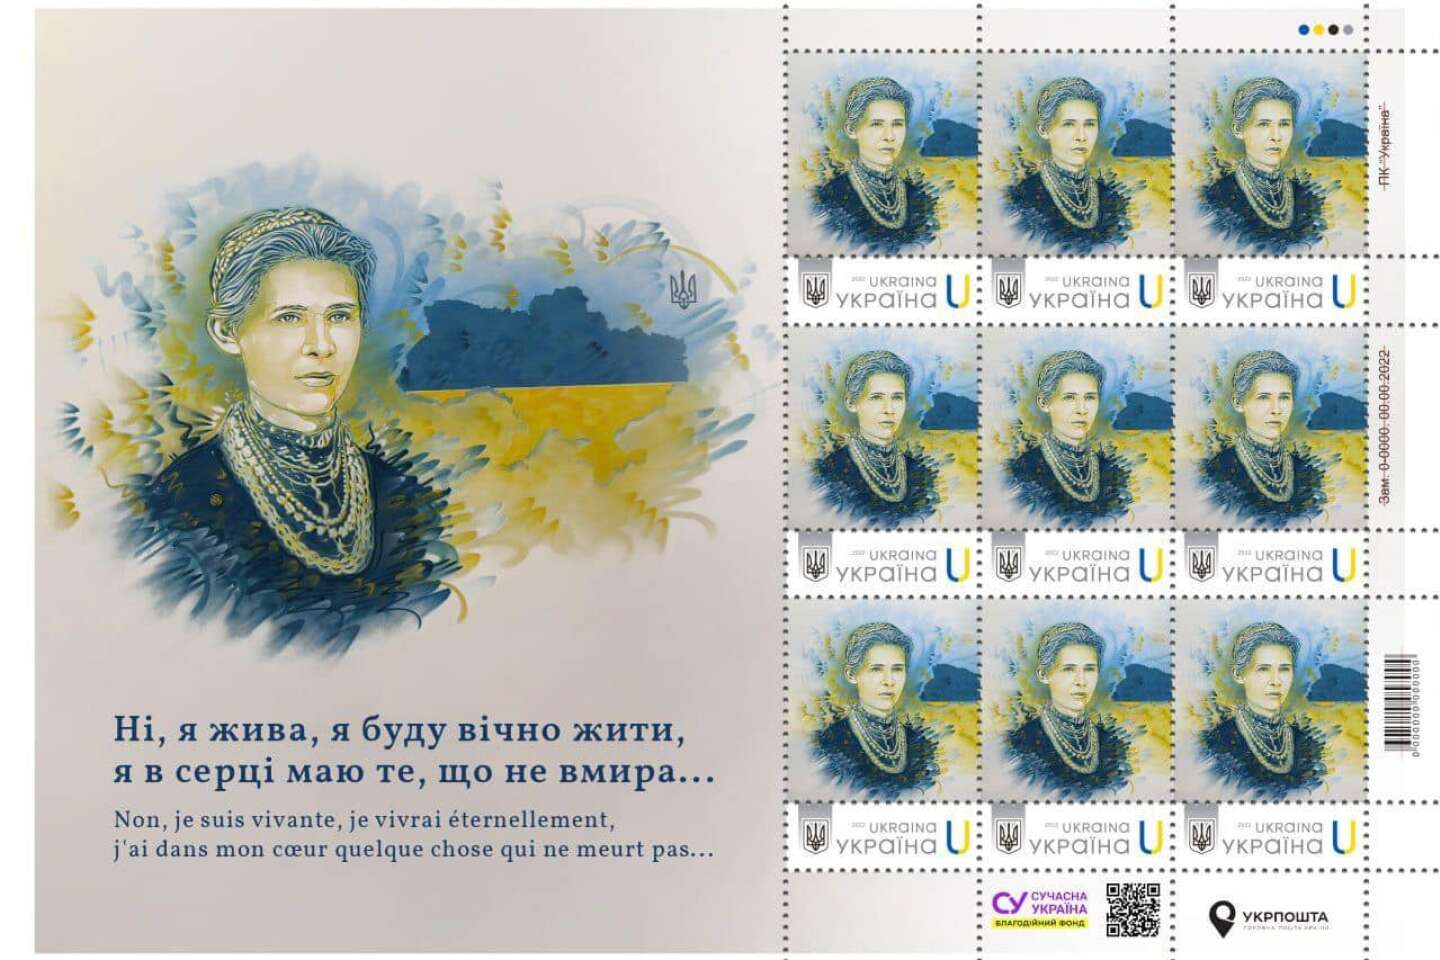 A Ukrainian stamp designed by C215